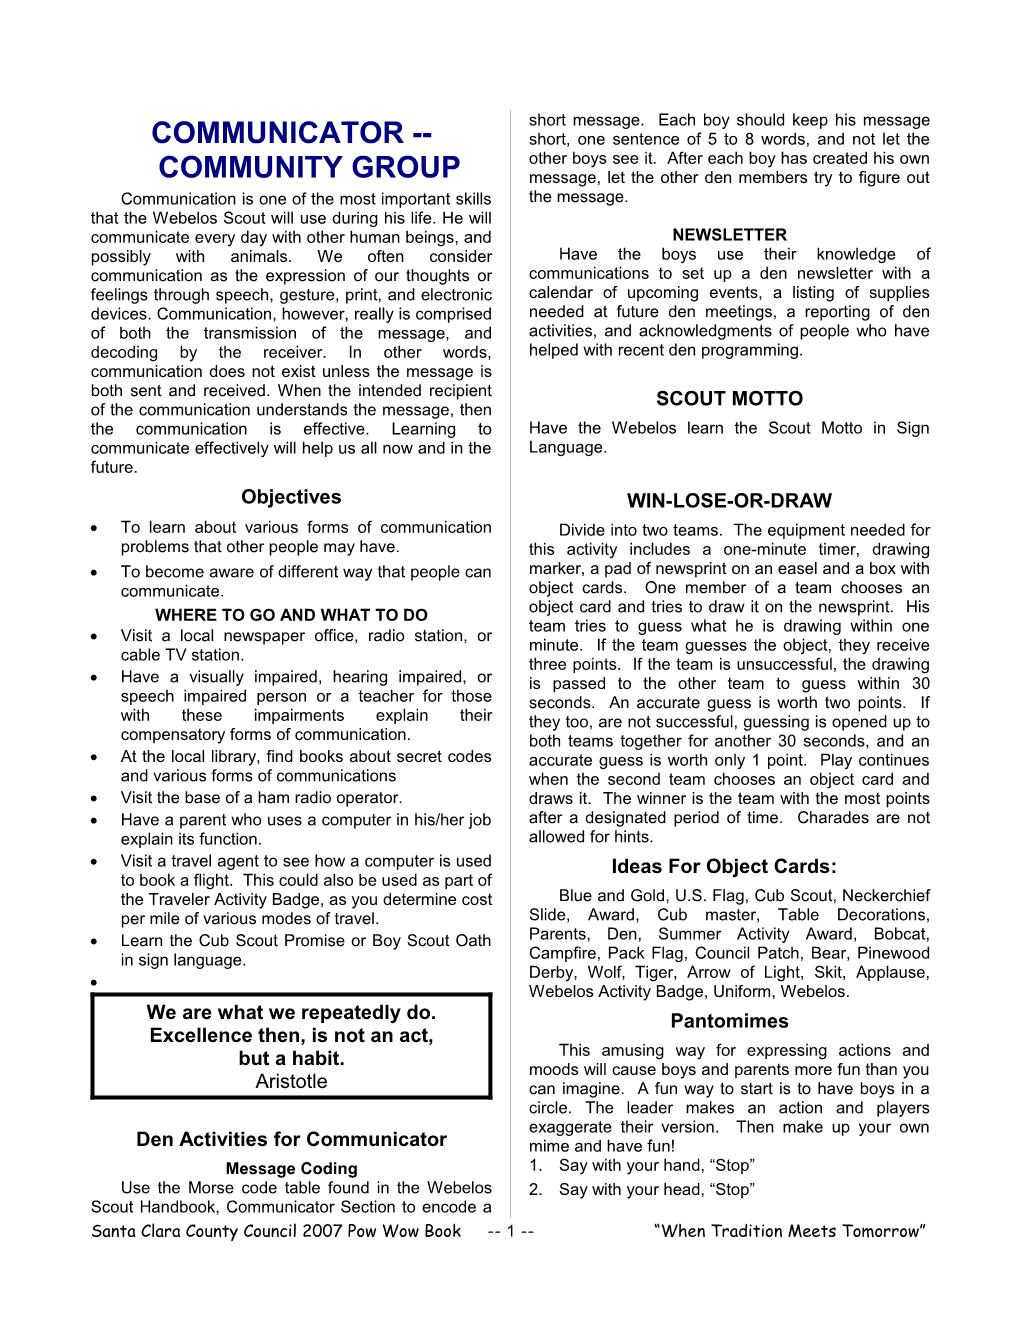 Communicator Community Group